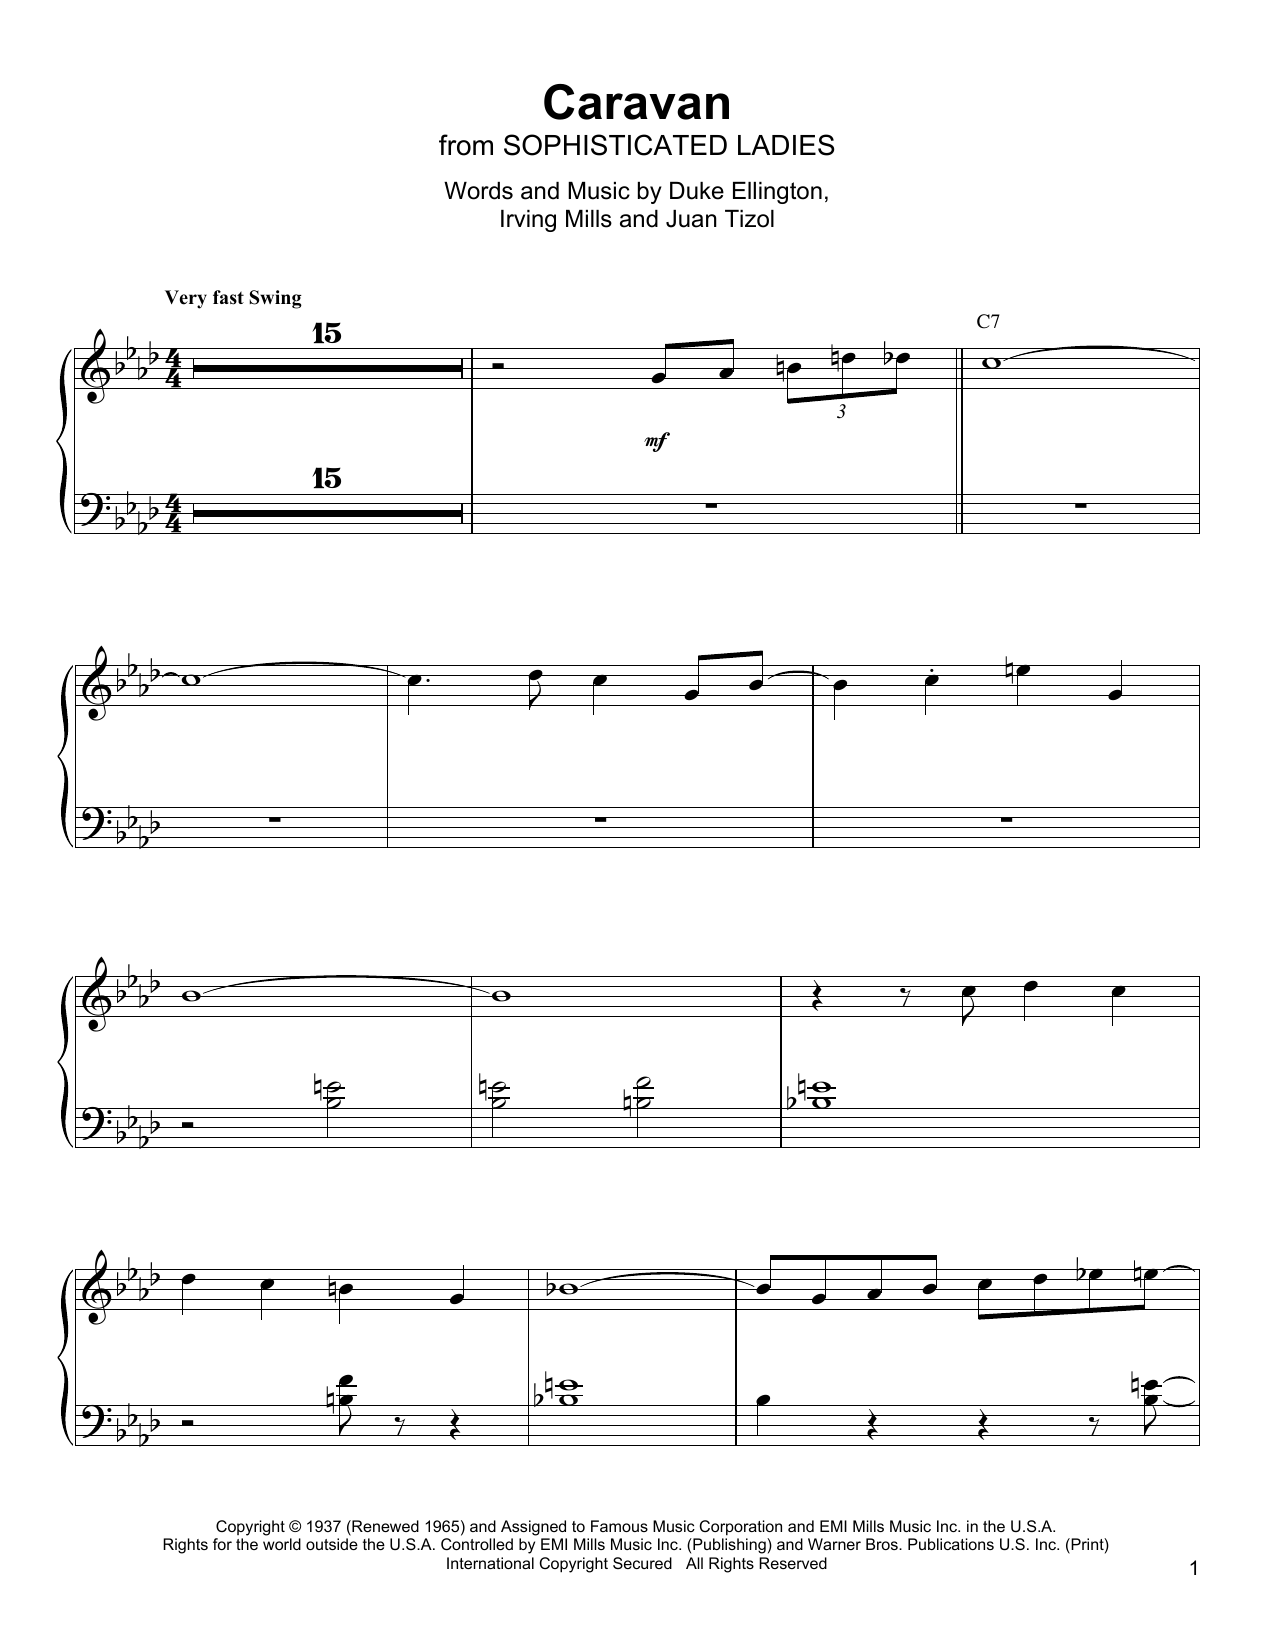 Oscar Peterson Caravan Sheet Music Notes & Chords for Piano Transcription - Download or Print PDF